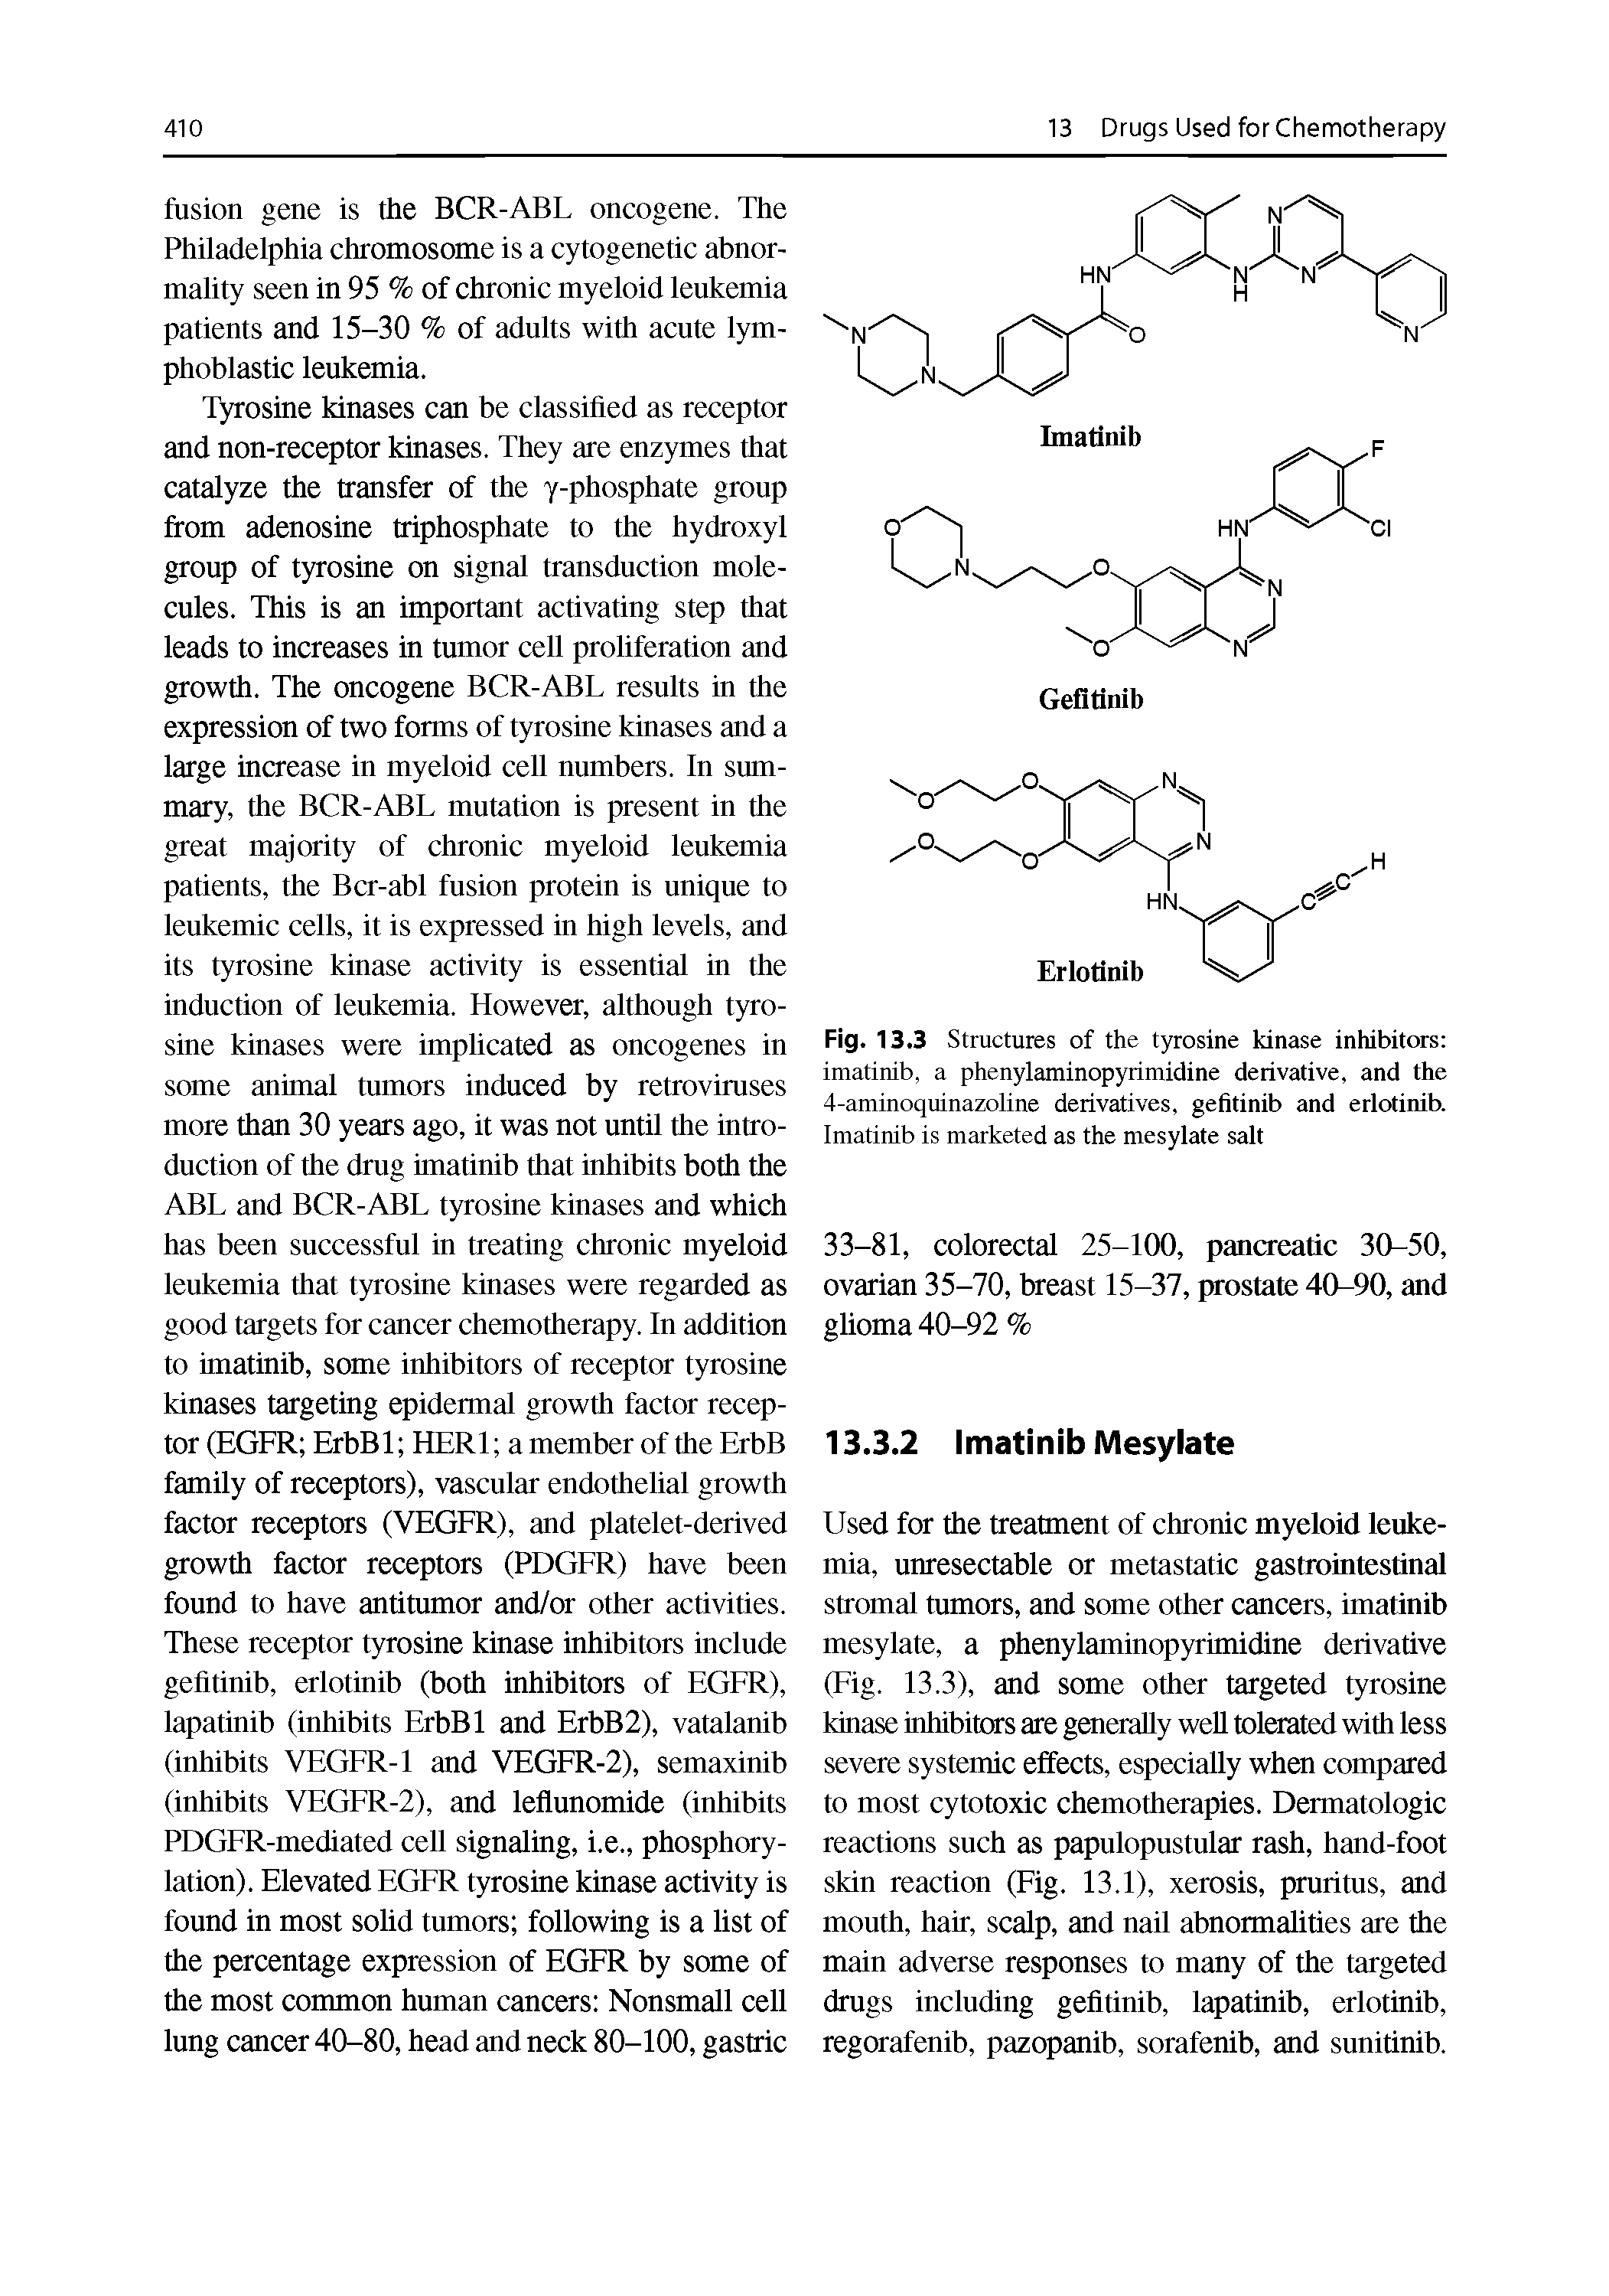 Fig. 13.3 Structures of the tyrosine kinase inhibitors imatinib, a phenylaminopyrimidine derivative, and the 4-aminoquinazoline derivatives, gefitinib and erlotinib. Imatinib is marketed as the mesylate salt...